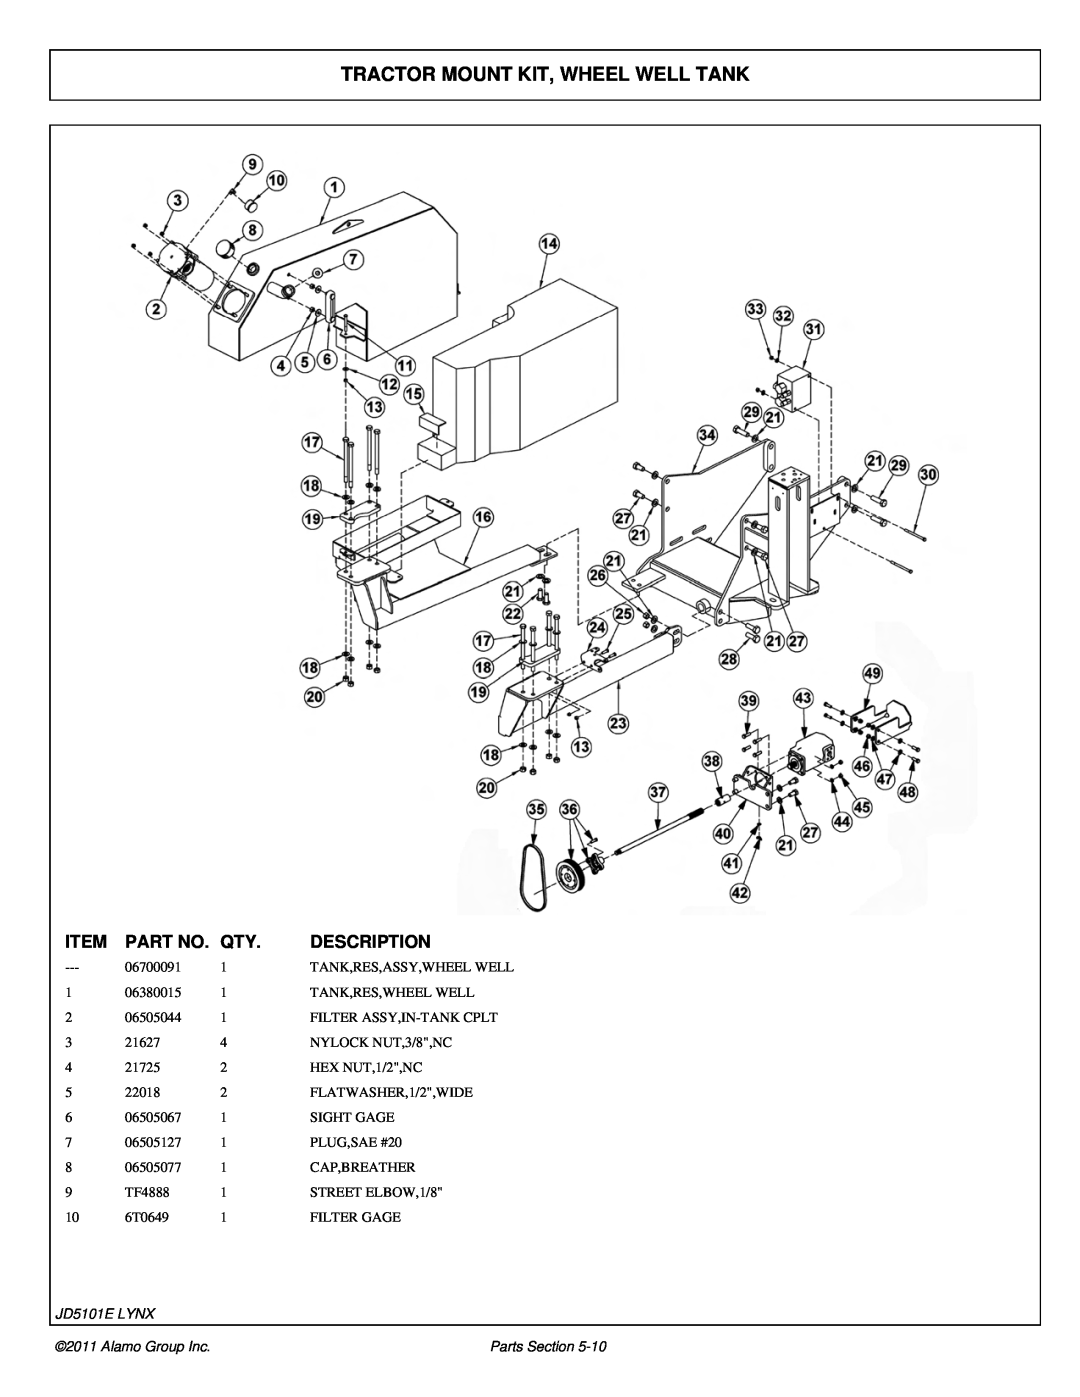 Tiger Products Co., Ltd 5083E, 5093E manual Tractor Mount Kit, Wheel Well Tank, Item, Part No, Description, JD5101E LYNX 